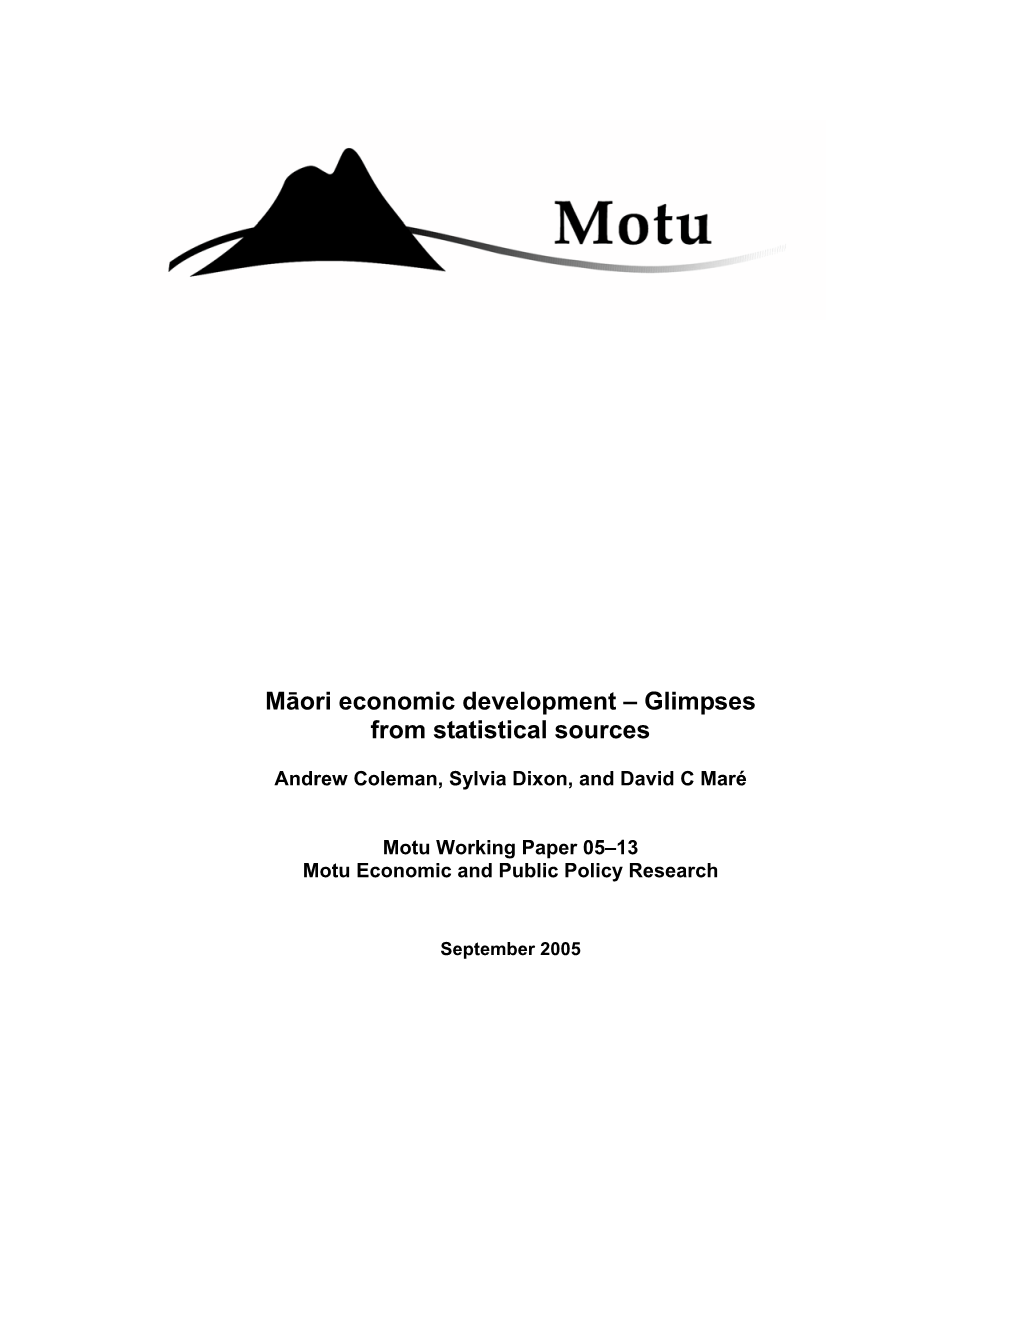 Māori Economic Development – Glimpses from Statistical Sources